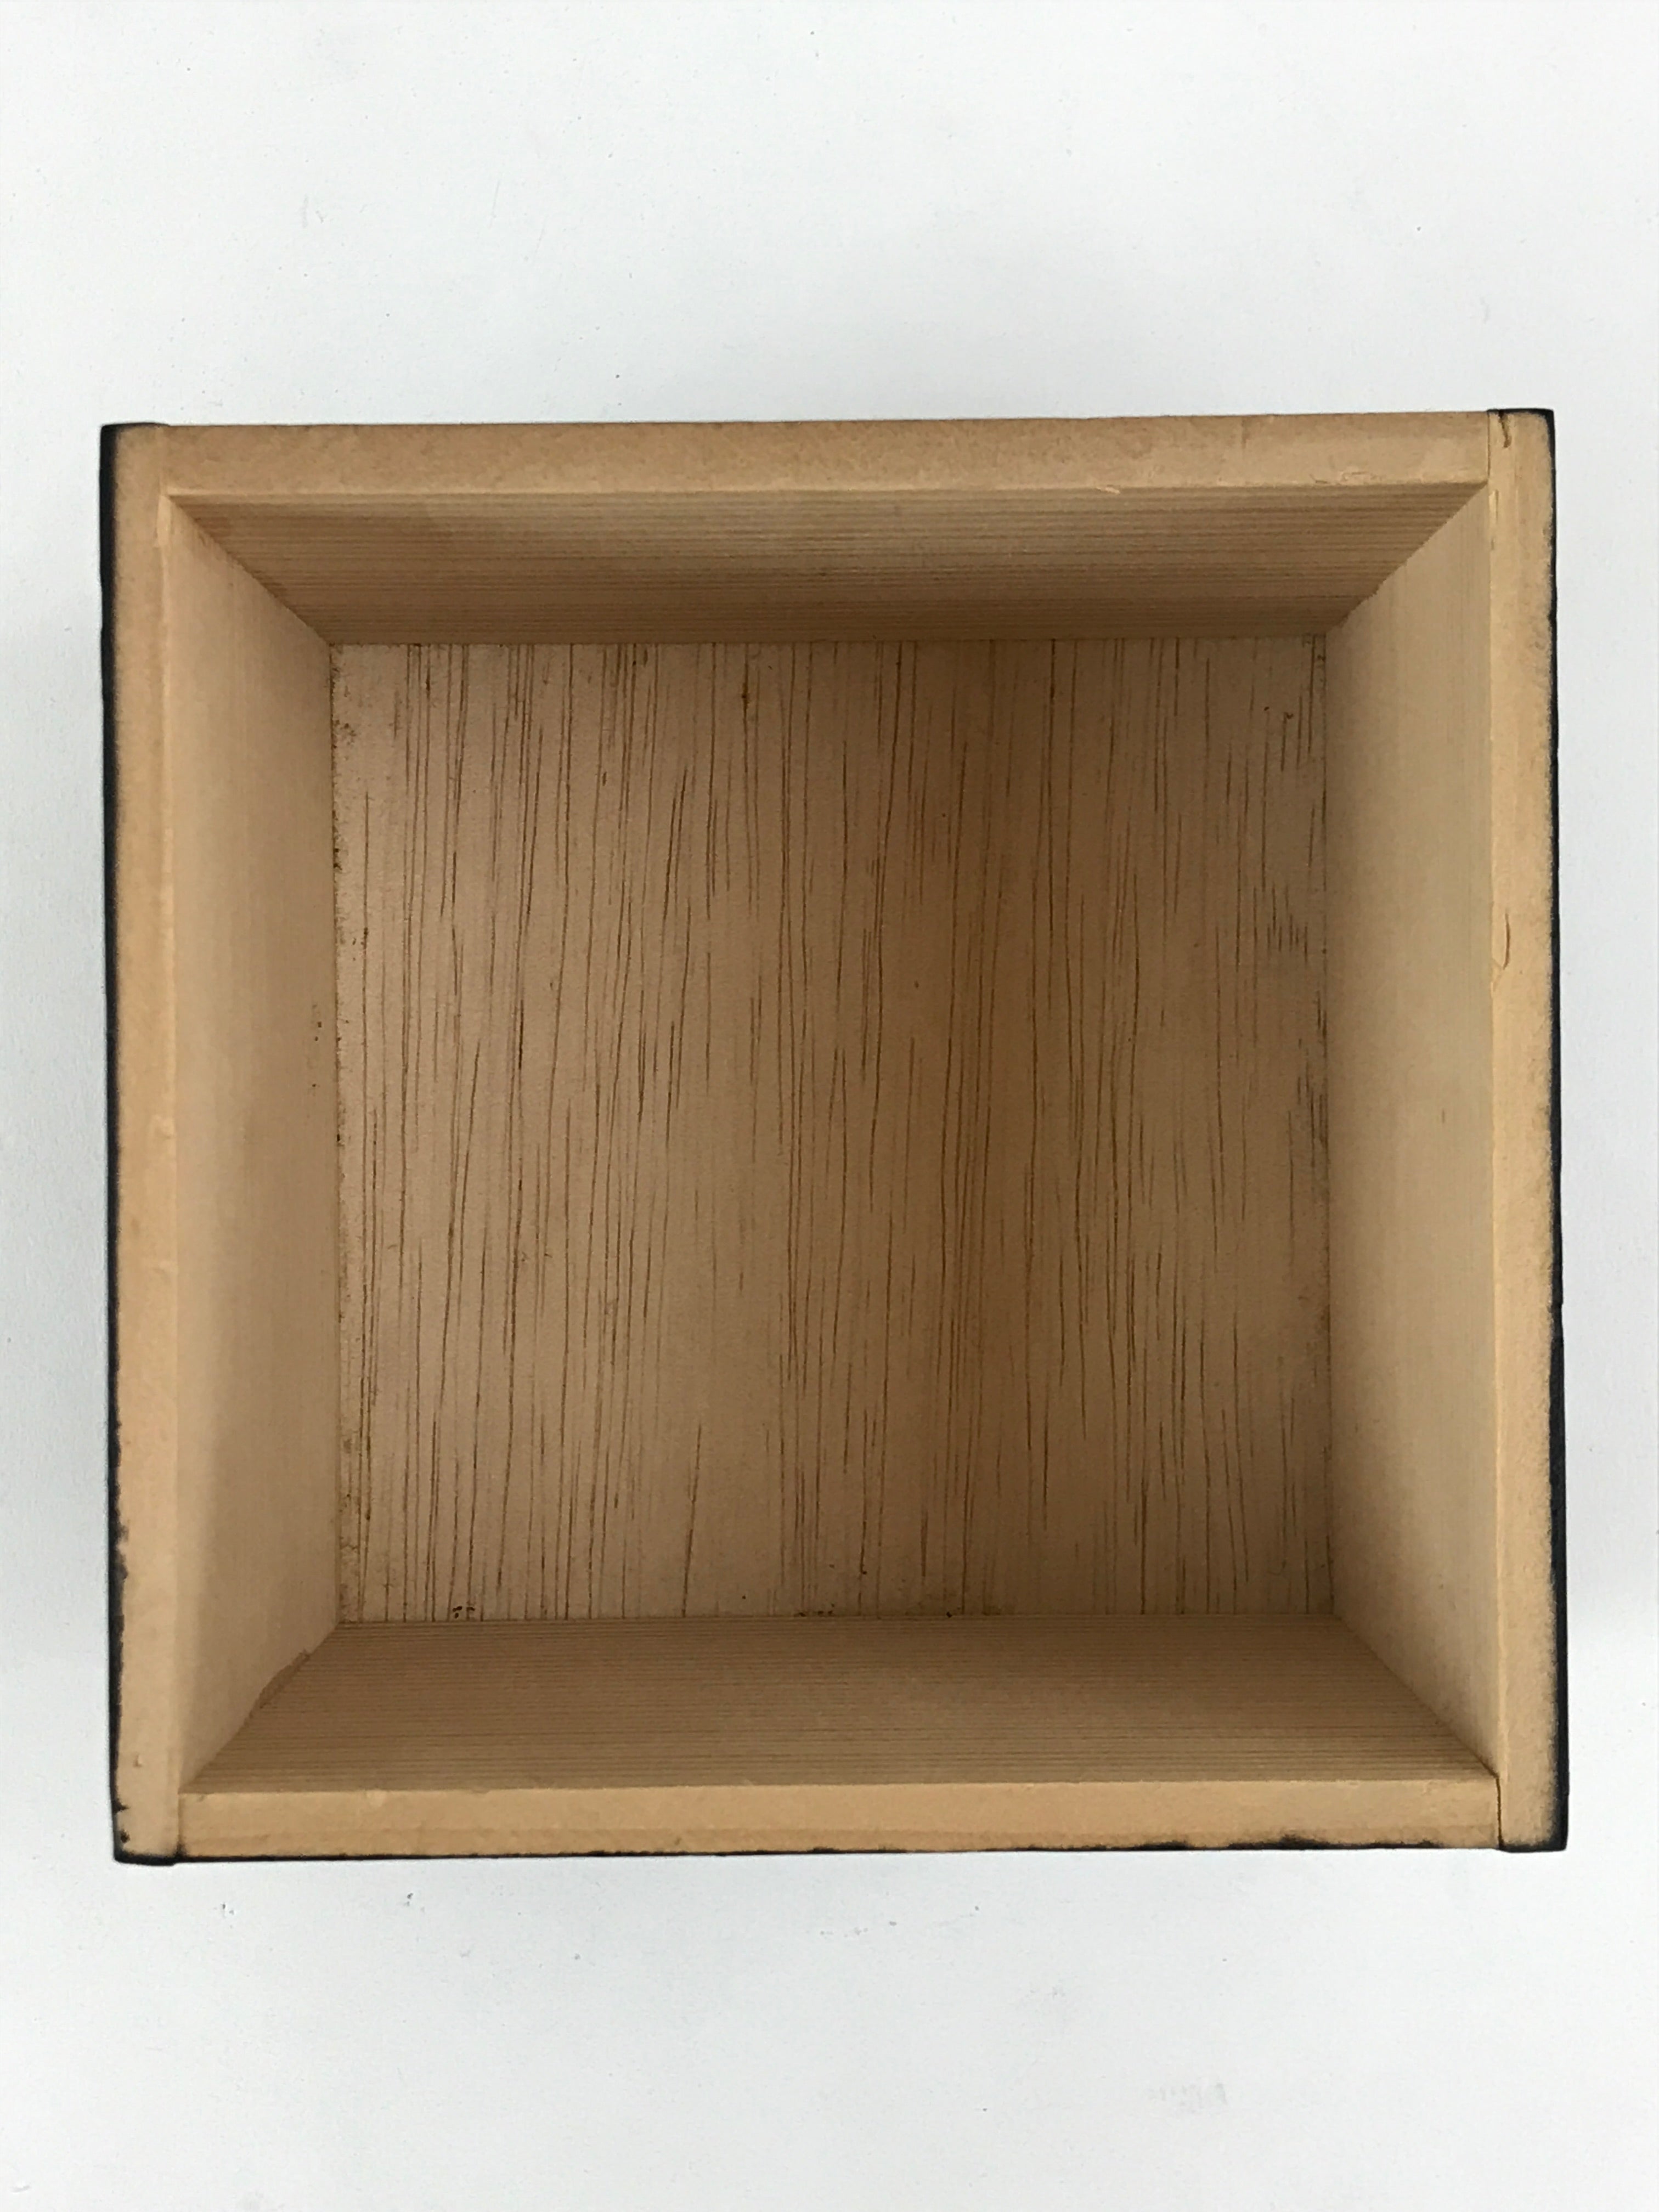 Vintage Japanese Wooden Lidded Storage Box Inside 11.5x11.5x9cm Small, Online Shop